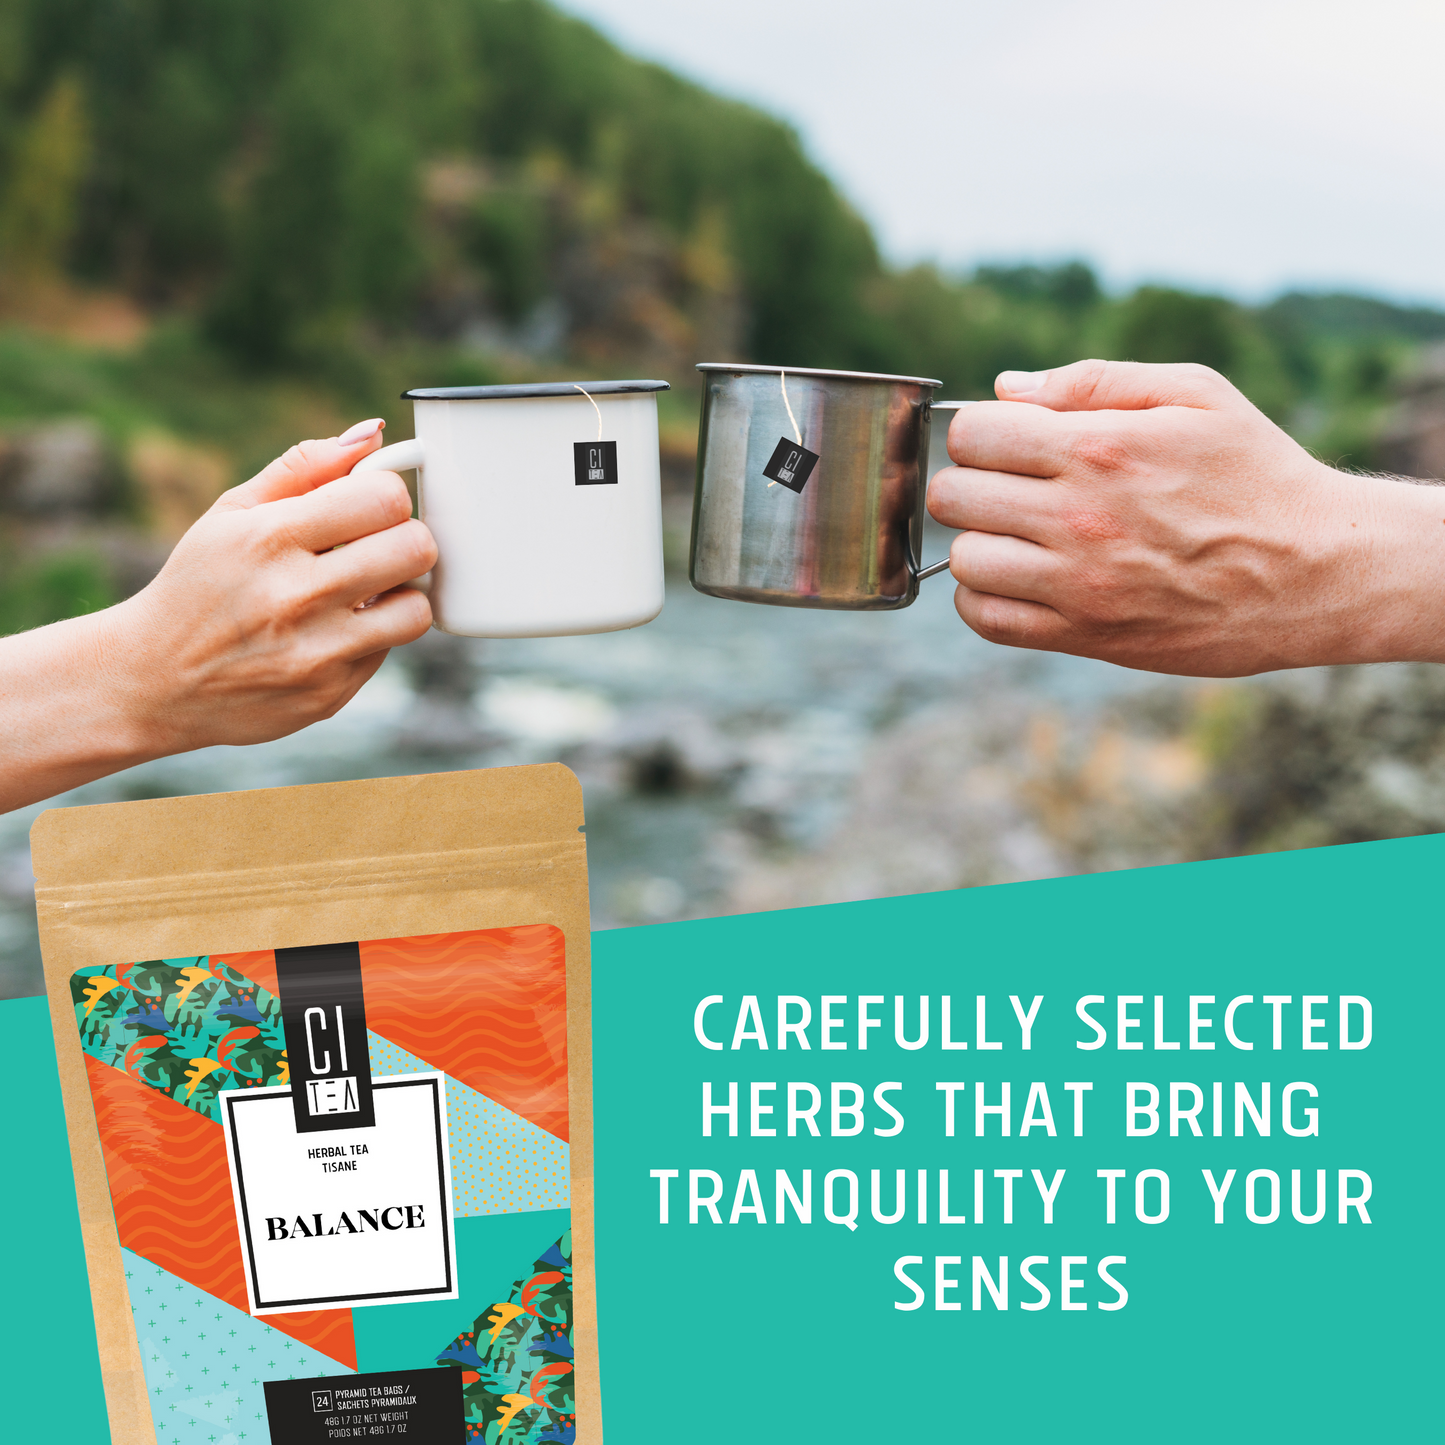 Balance Herbal Tea in Teabags - 24 Teabags